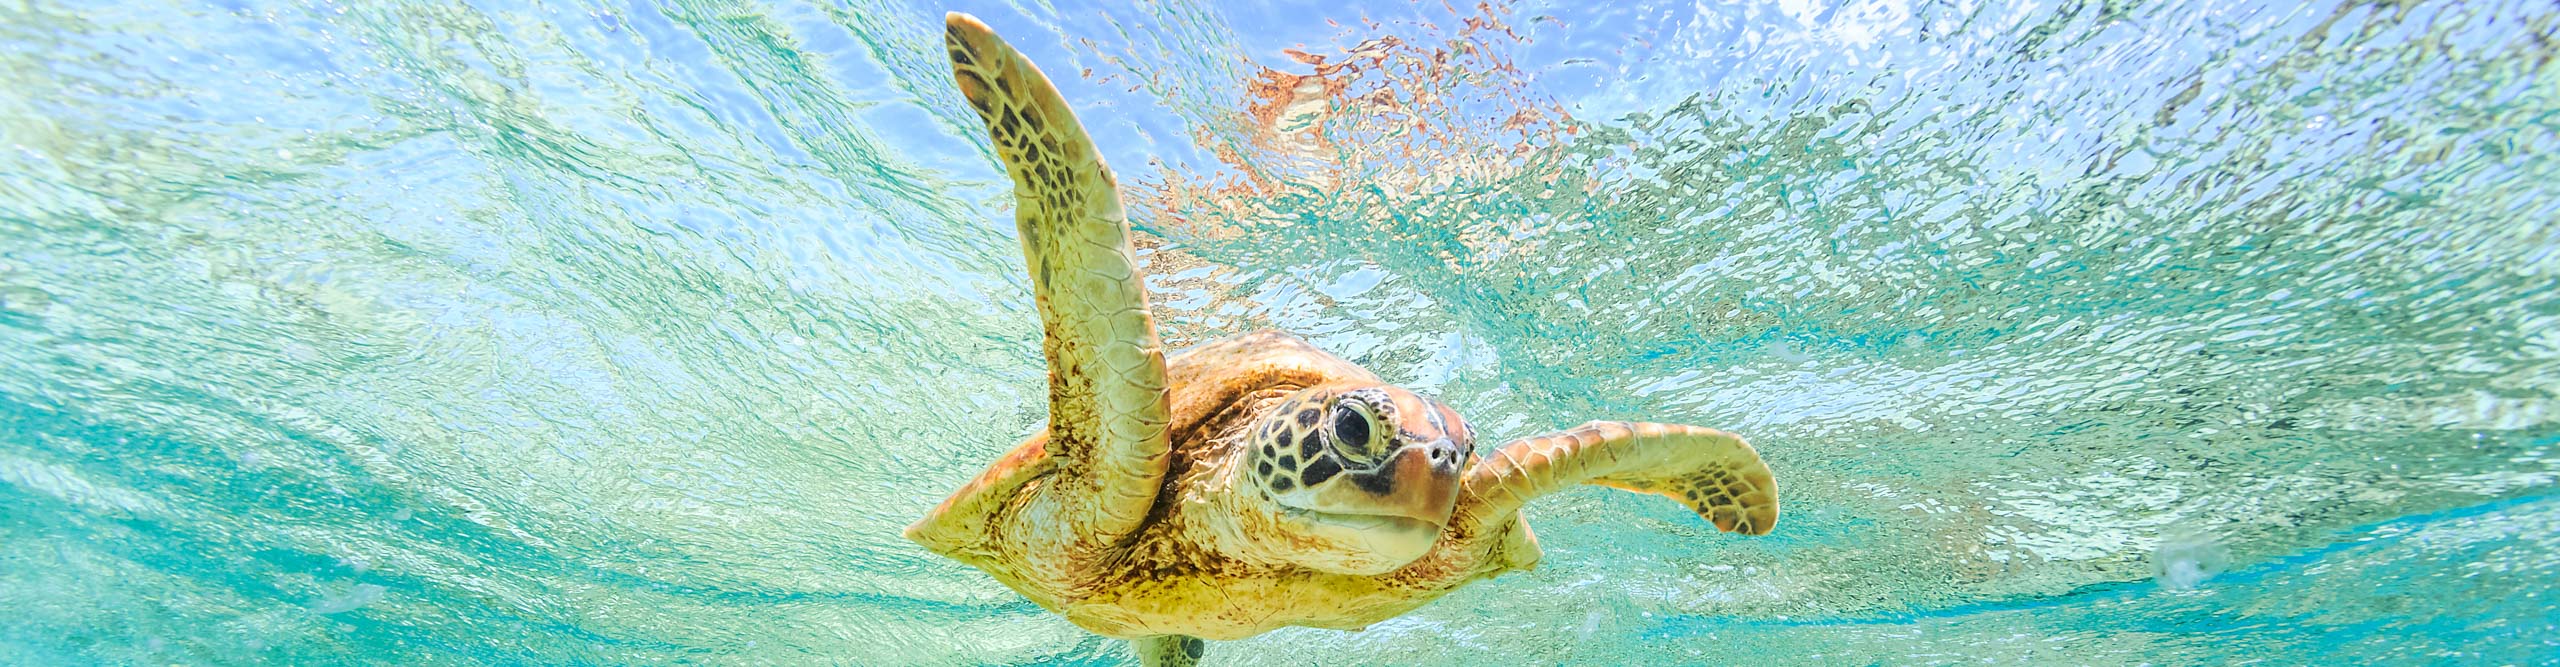 Sea turtle giving a high five underwater, Queensland, Australia 